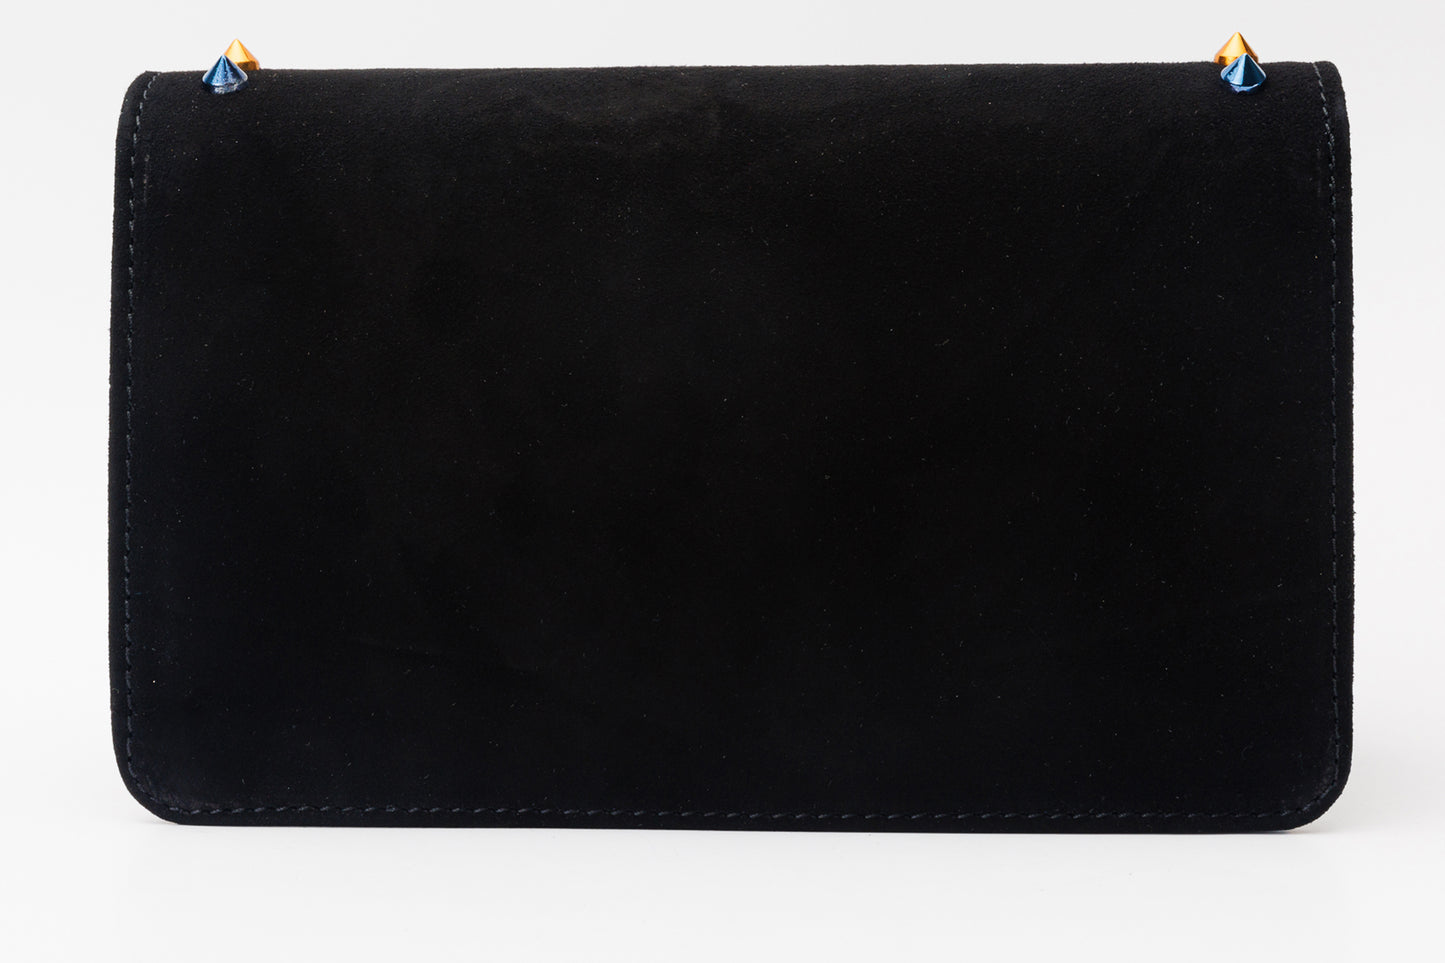 The Caris Black Leather Handbag